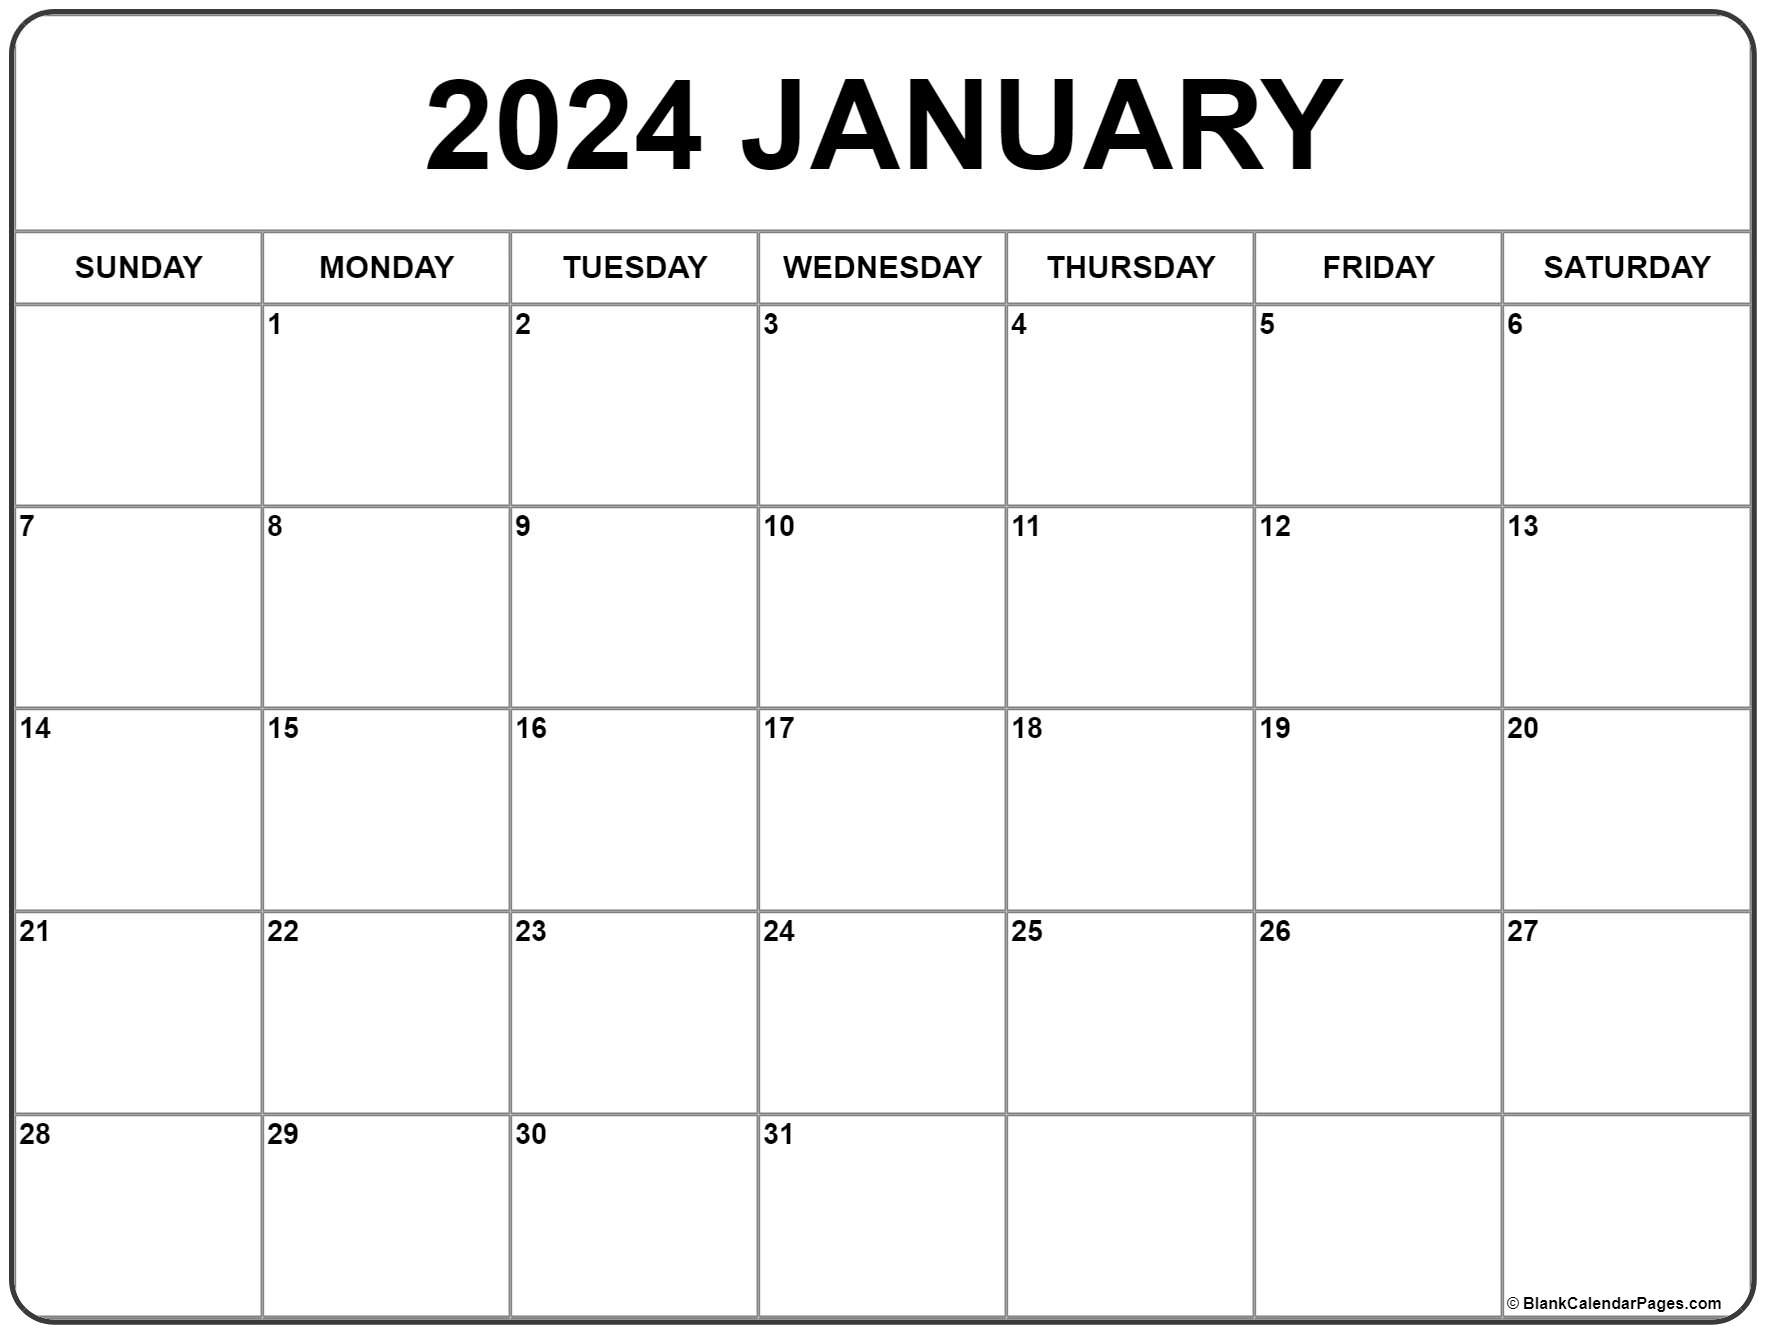 January 2024 Calendar | Free Printable Calendar for Free Printable Calendar Jan 2024